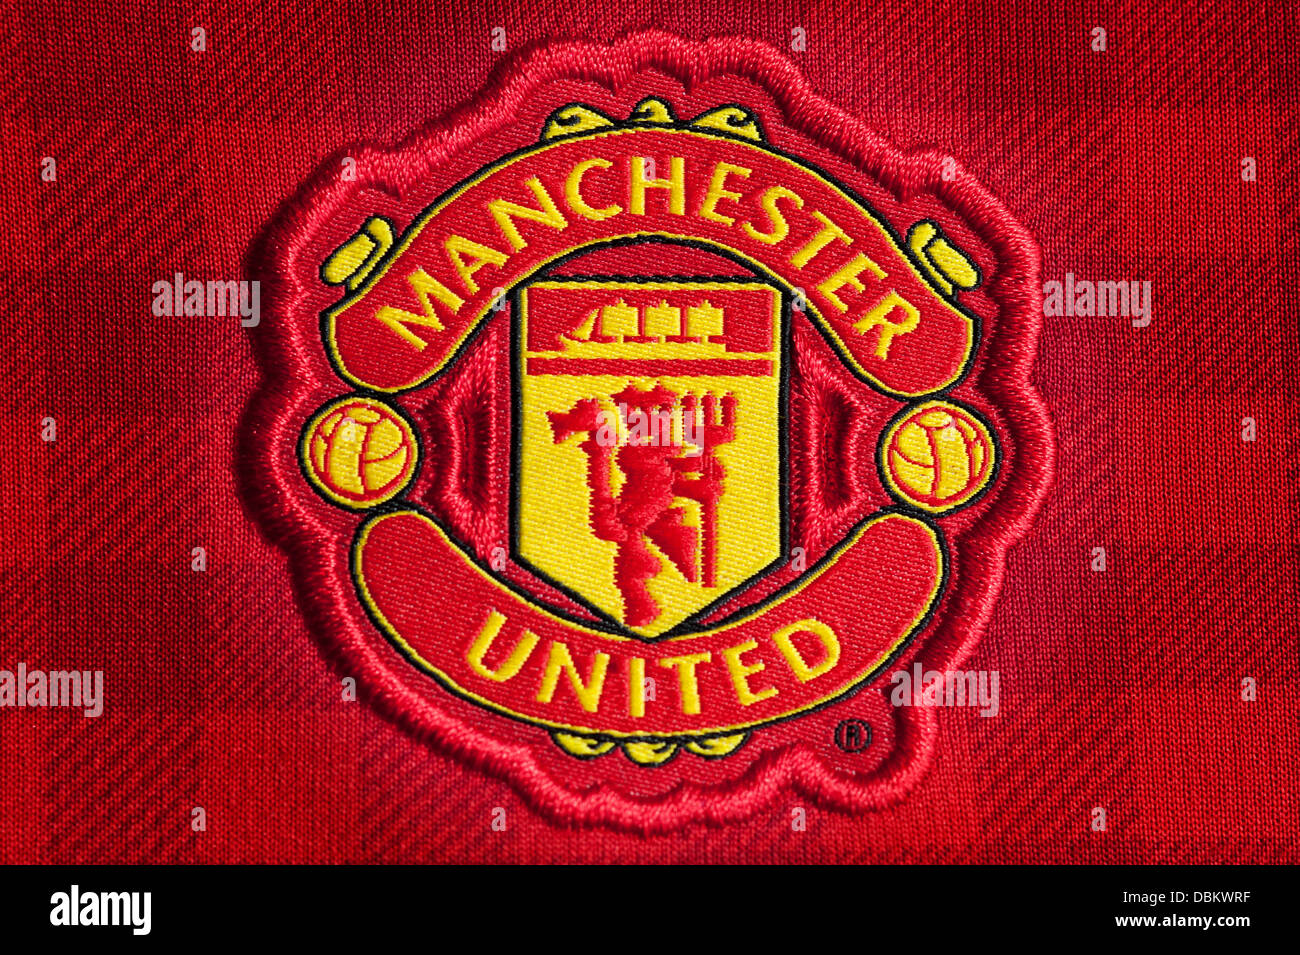 Manchester United Football Club Crest Foto de stock